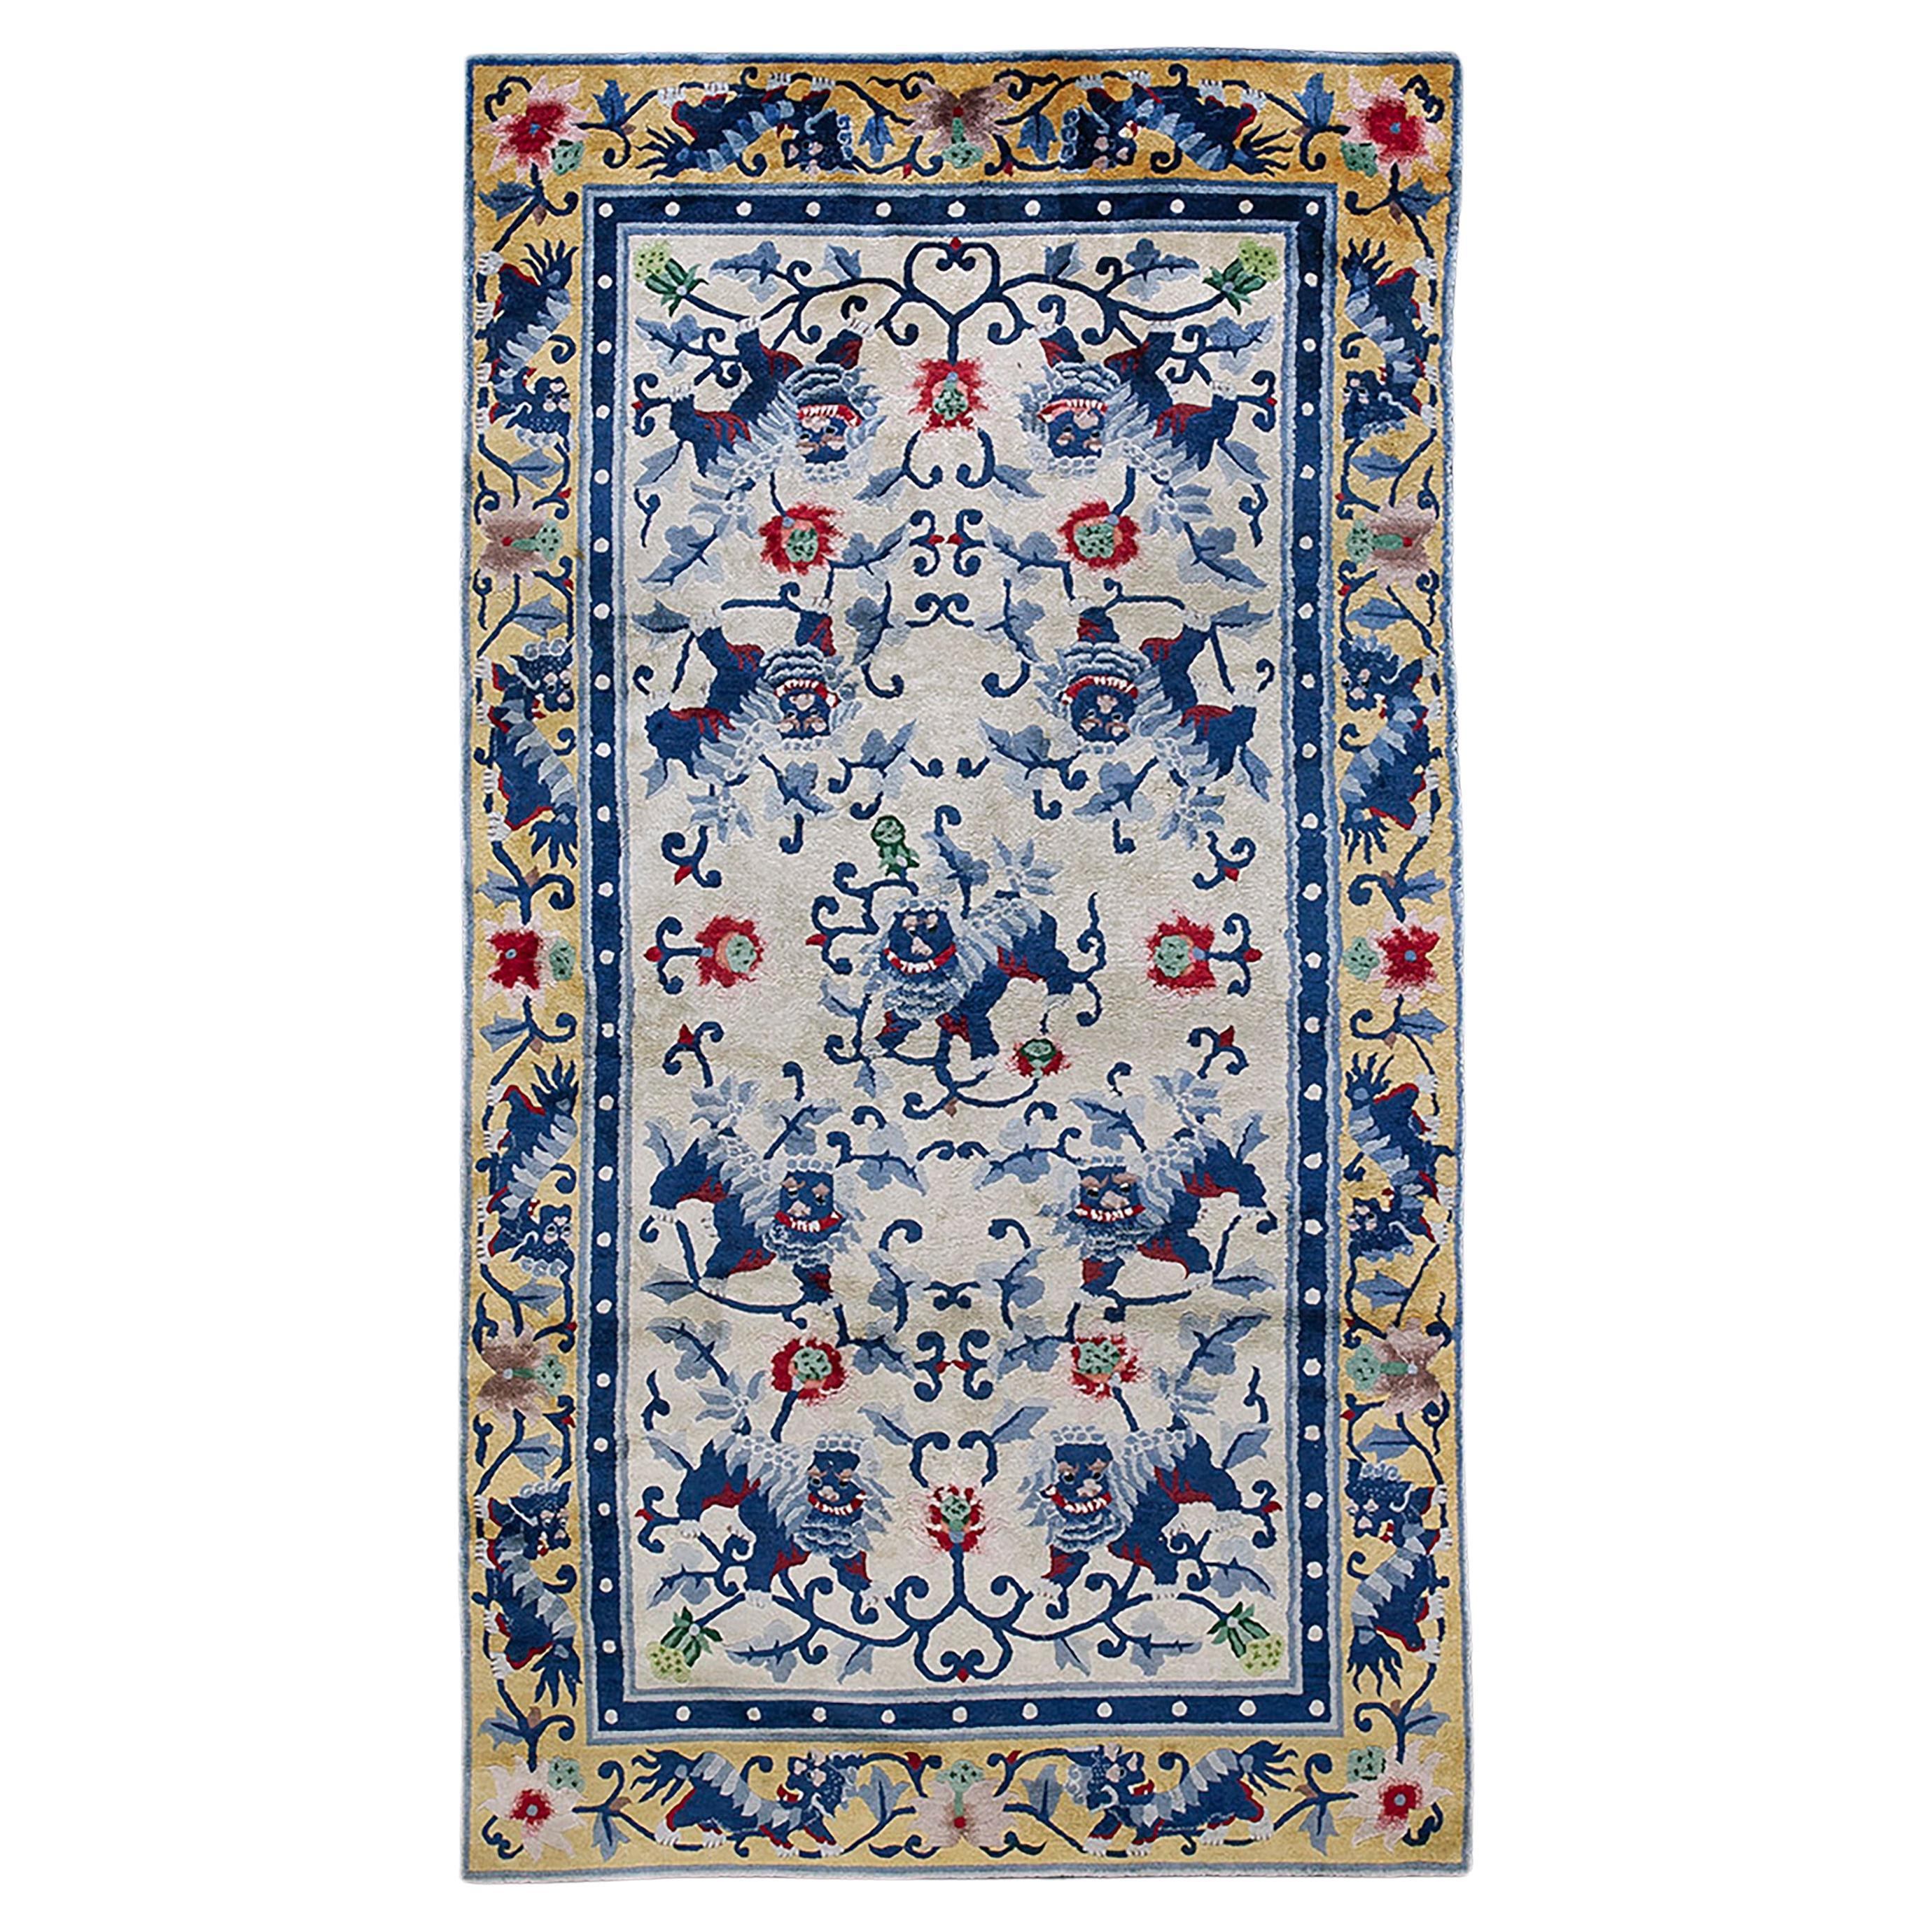 1930s Chinese Silk Carpet with Foo Dog Design ( 4' x 7' - 122 x 213 )